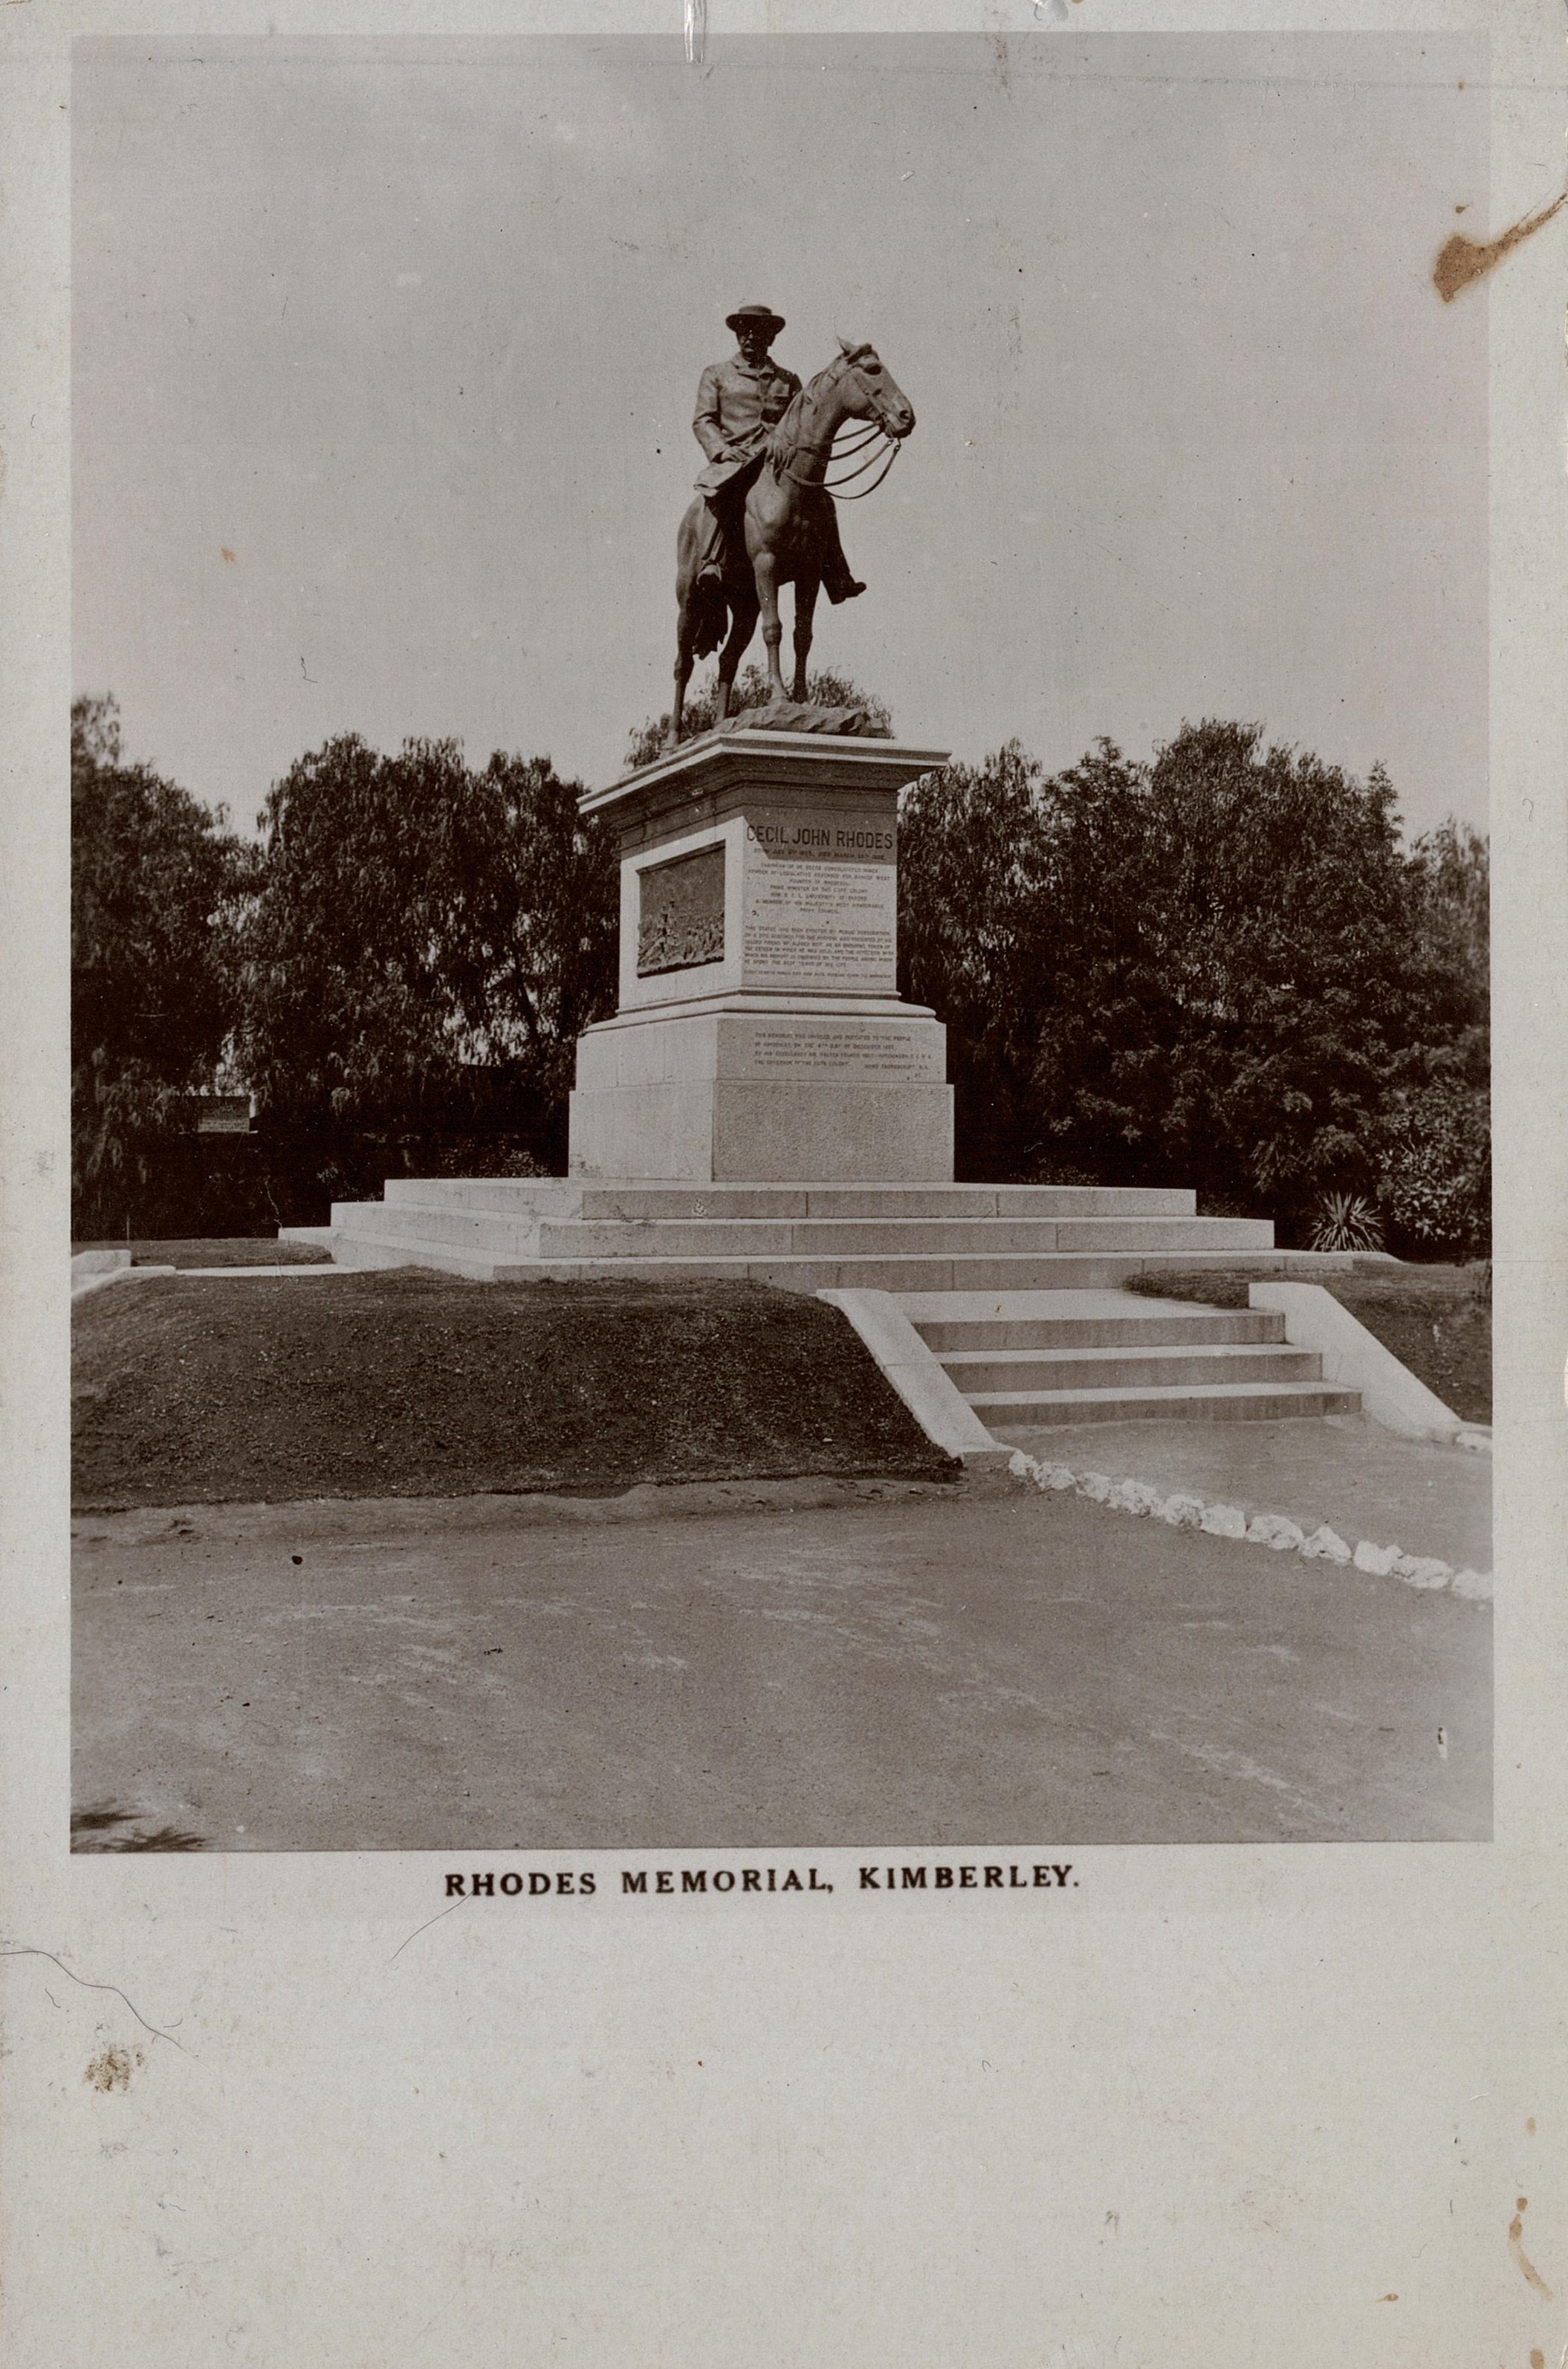 Rhodes Memorial in Kimberley